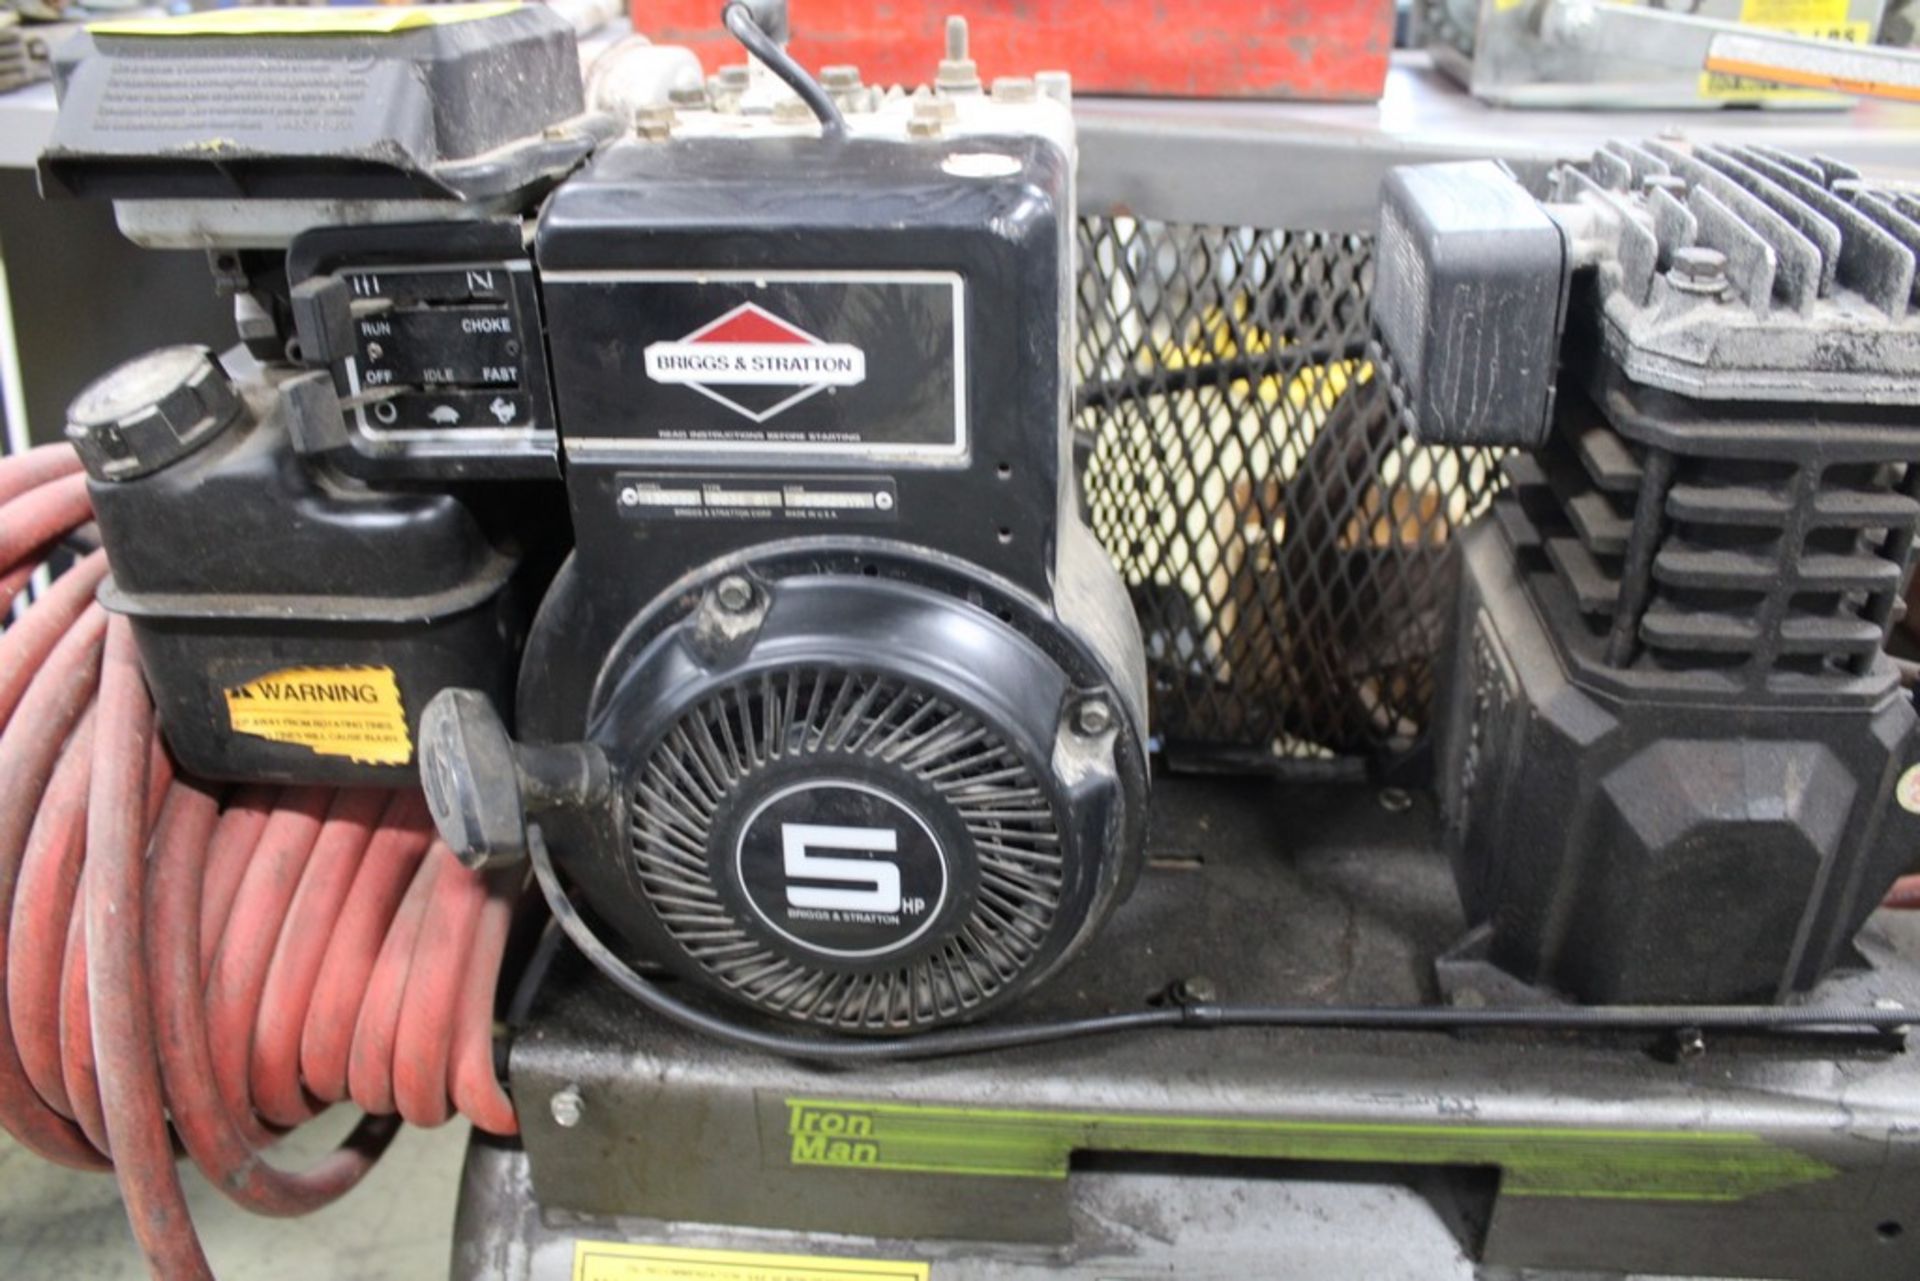 NAPA PORTABLE AIR COMPRESSOR, BRIGGS & STRATTON 5 HP GAS ENGINE - Image 2 of 4